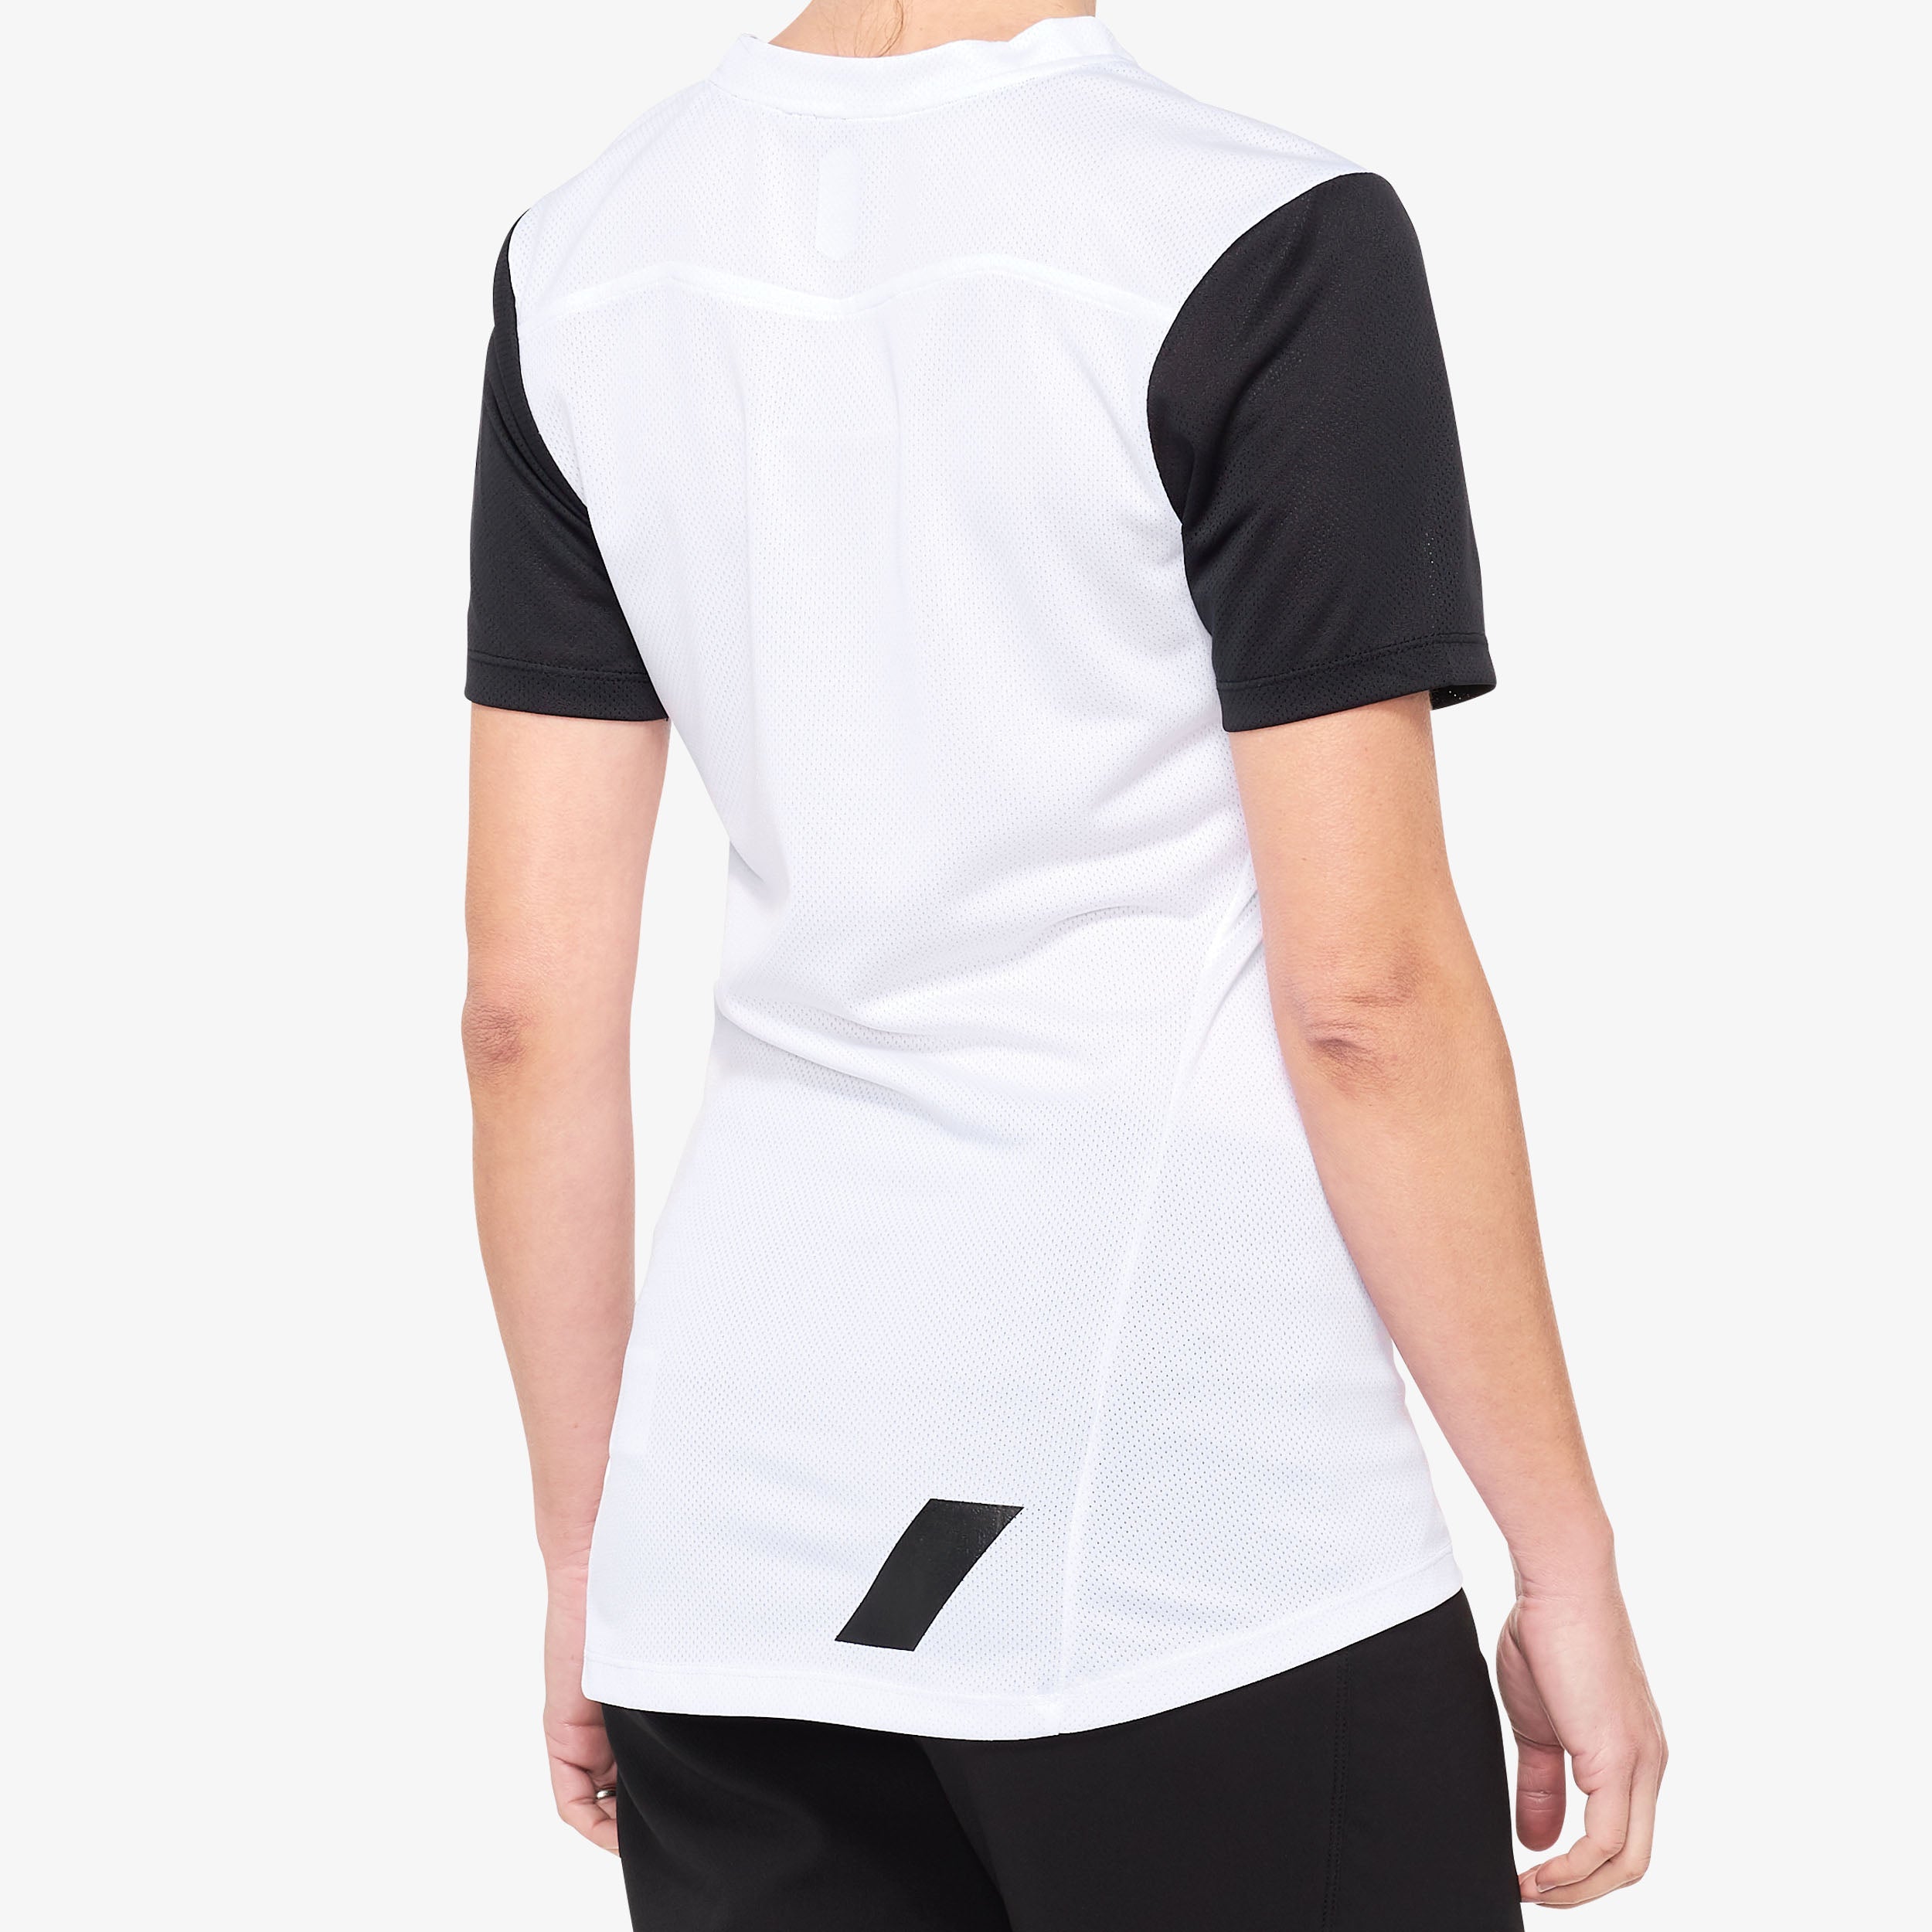 RIDECAMP Women's Short Sleeve Jersey White/Black